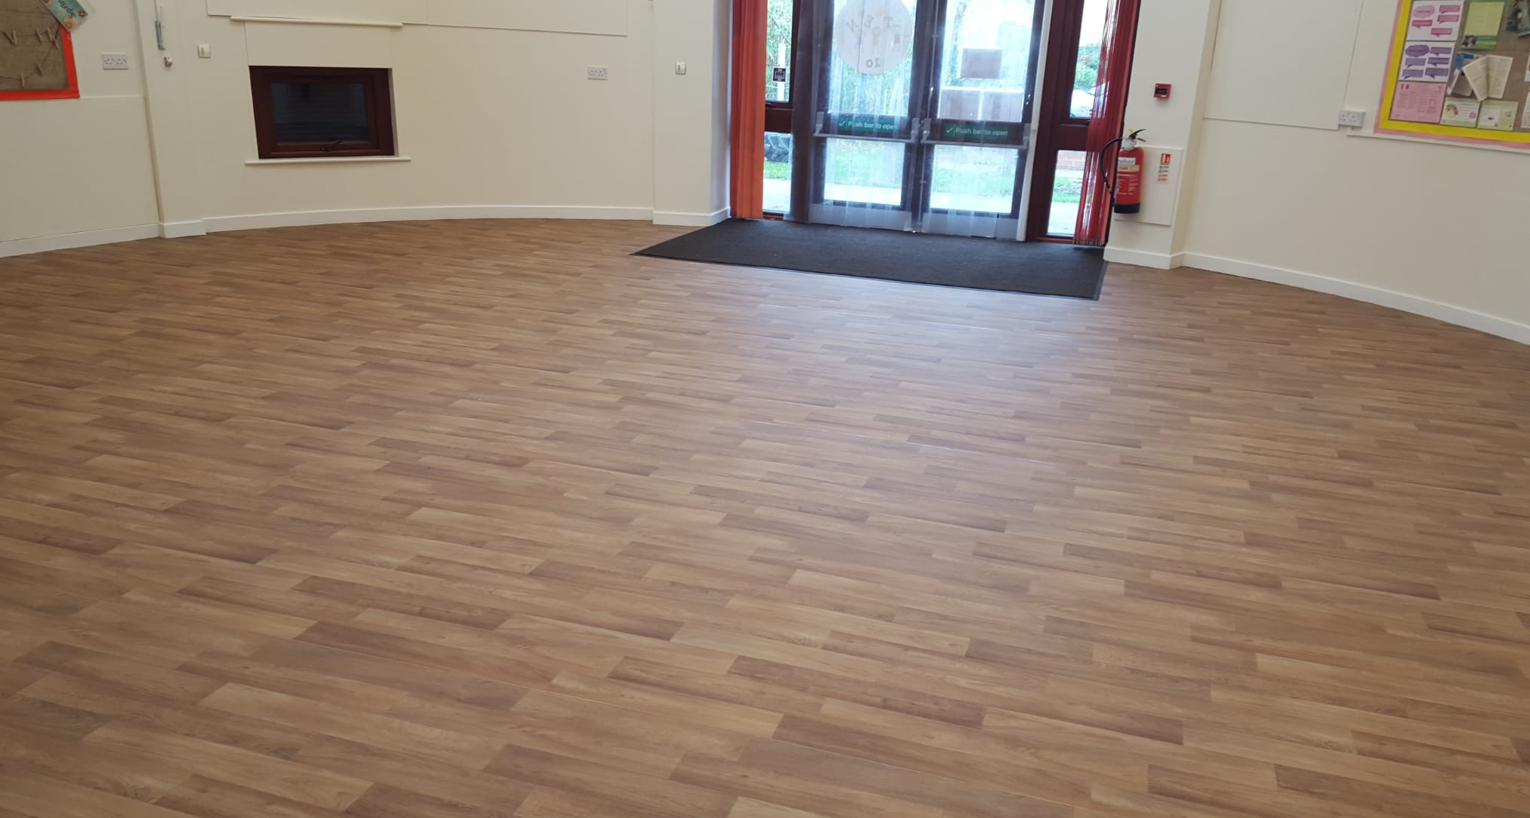 A New flooring in a school